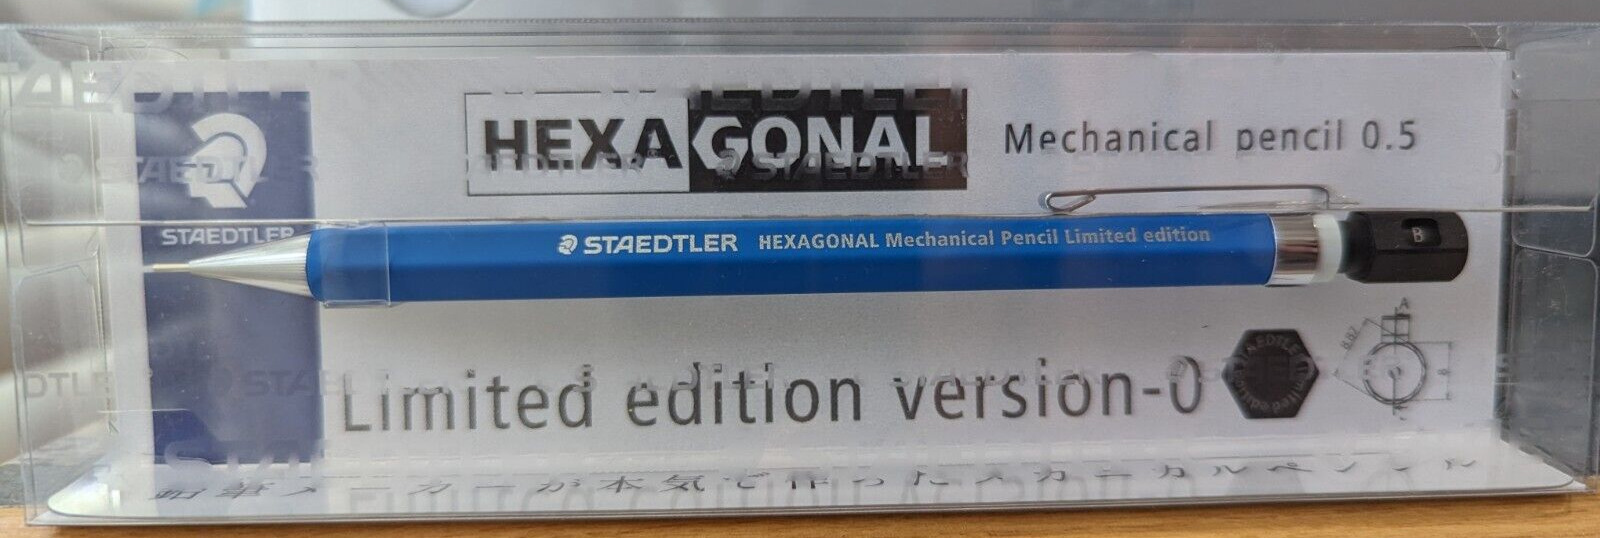 NEW STAEDTLER Hexagonal Mechanical Pencil BLUE Version-0 LIMITED EDITION - Japan